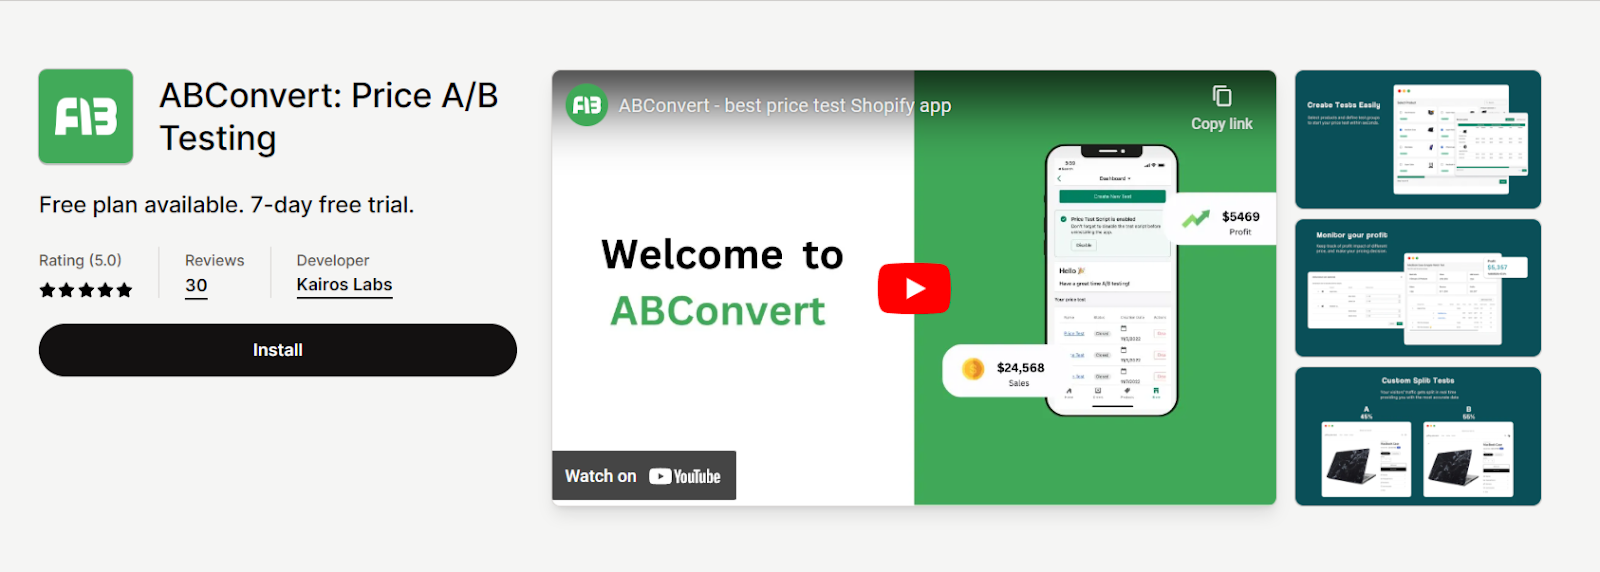 ABConvert: Price A/B Testing